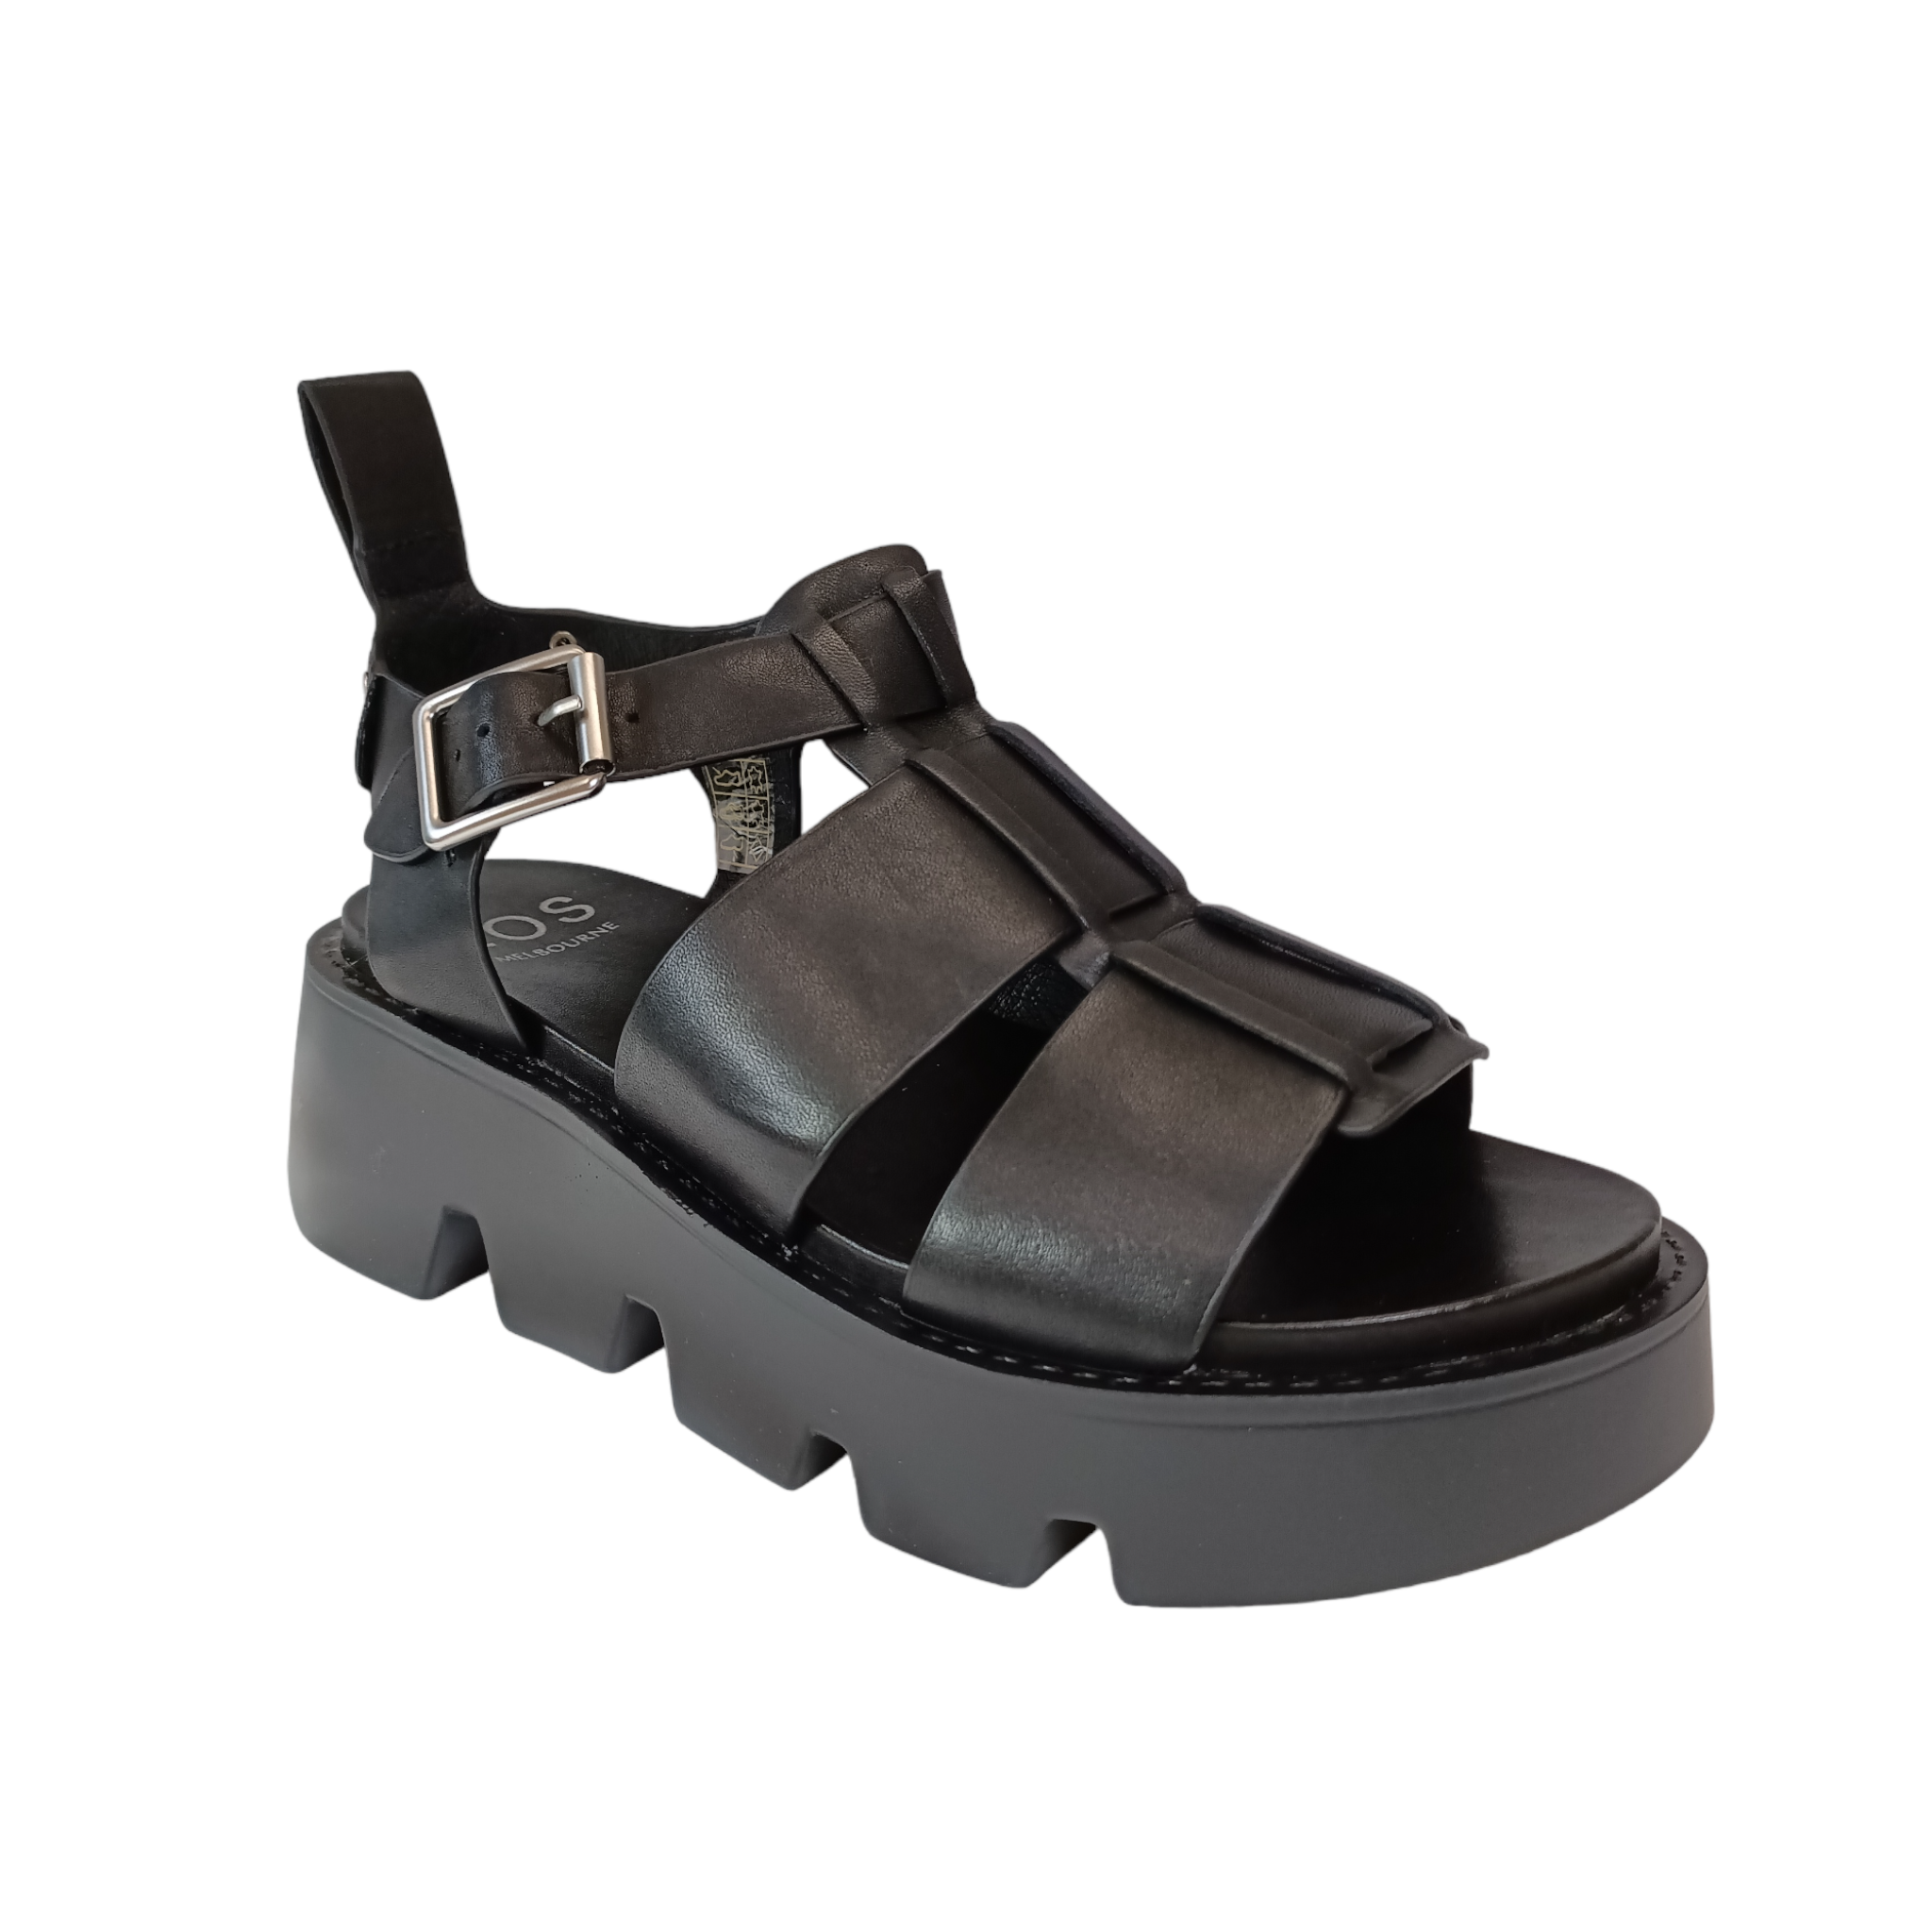 Kailan - shoe&amp;me - EOS - Sandal - Sandals, Summer, Womens